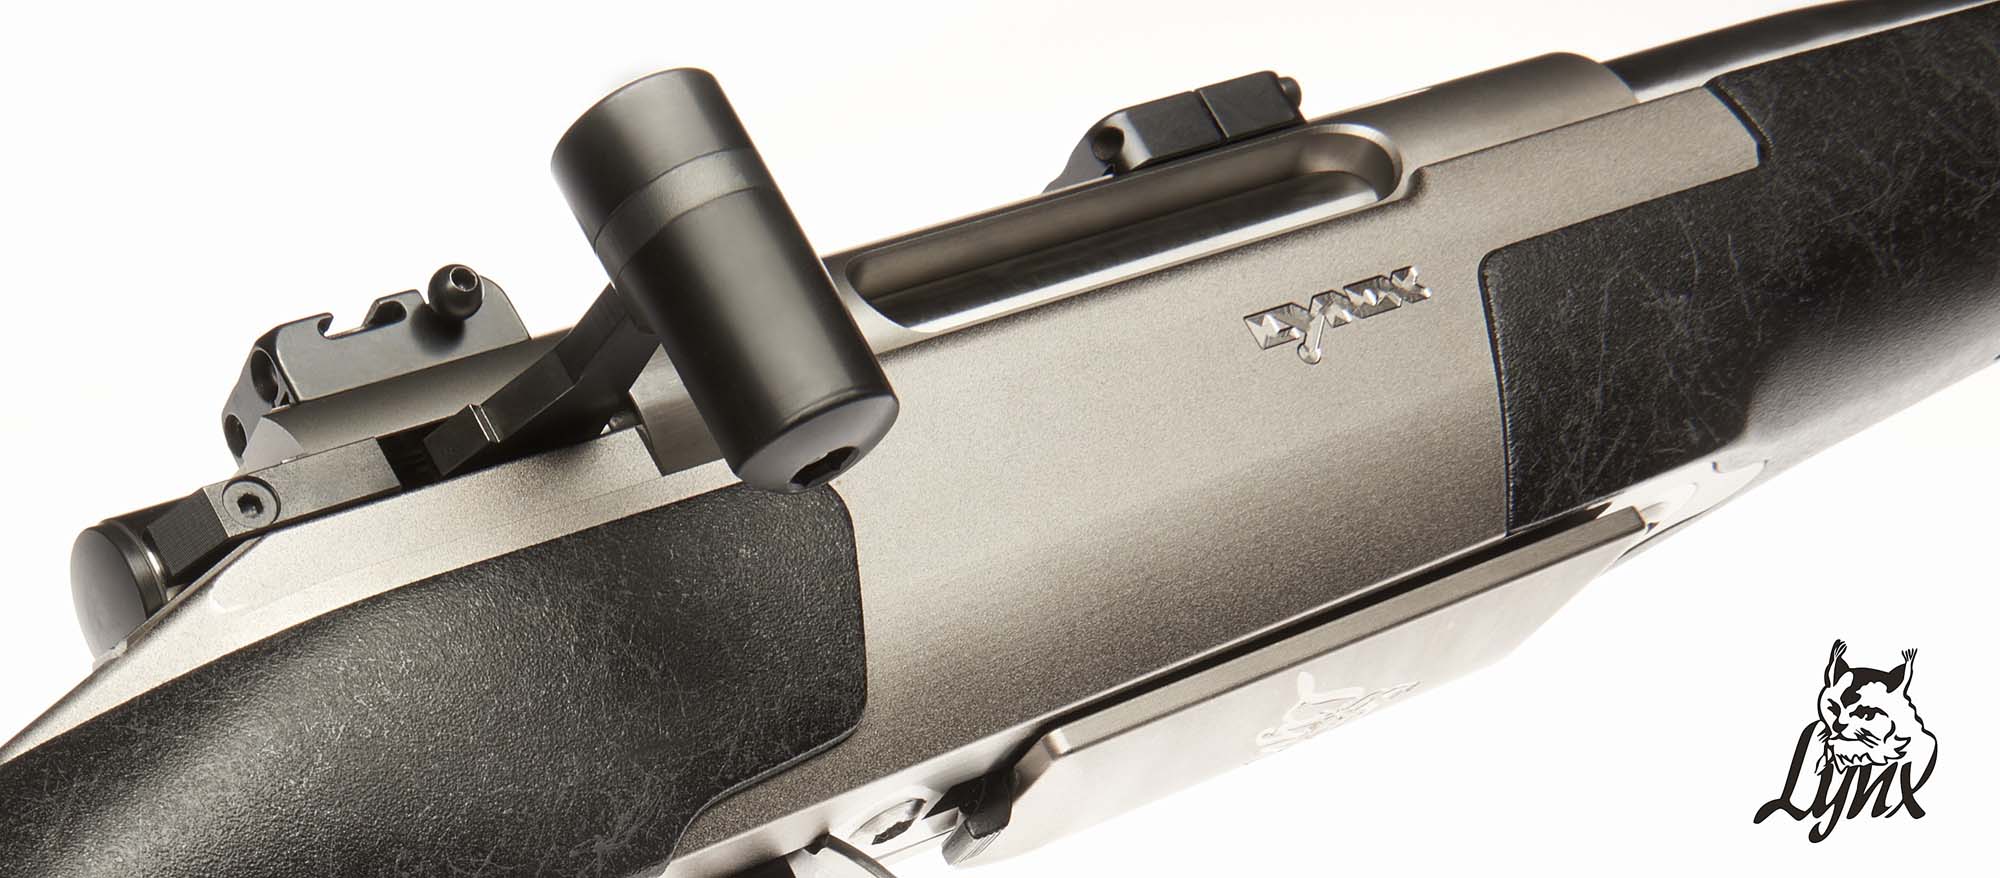 Lynx TD21, a new straight-pull hunting rifle